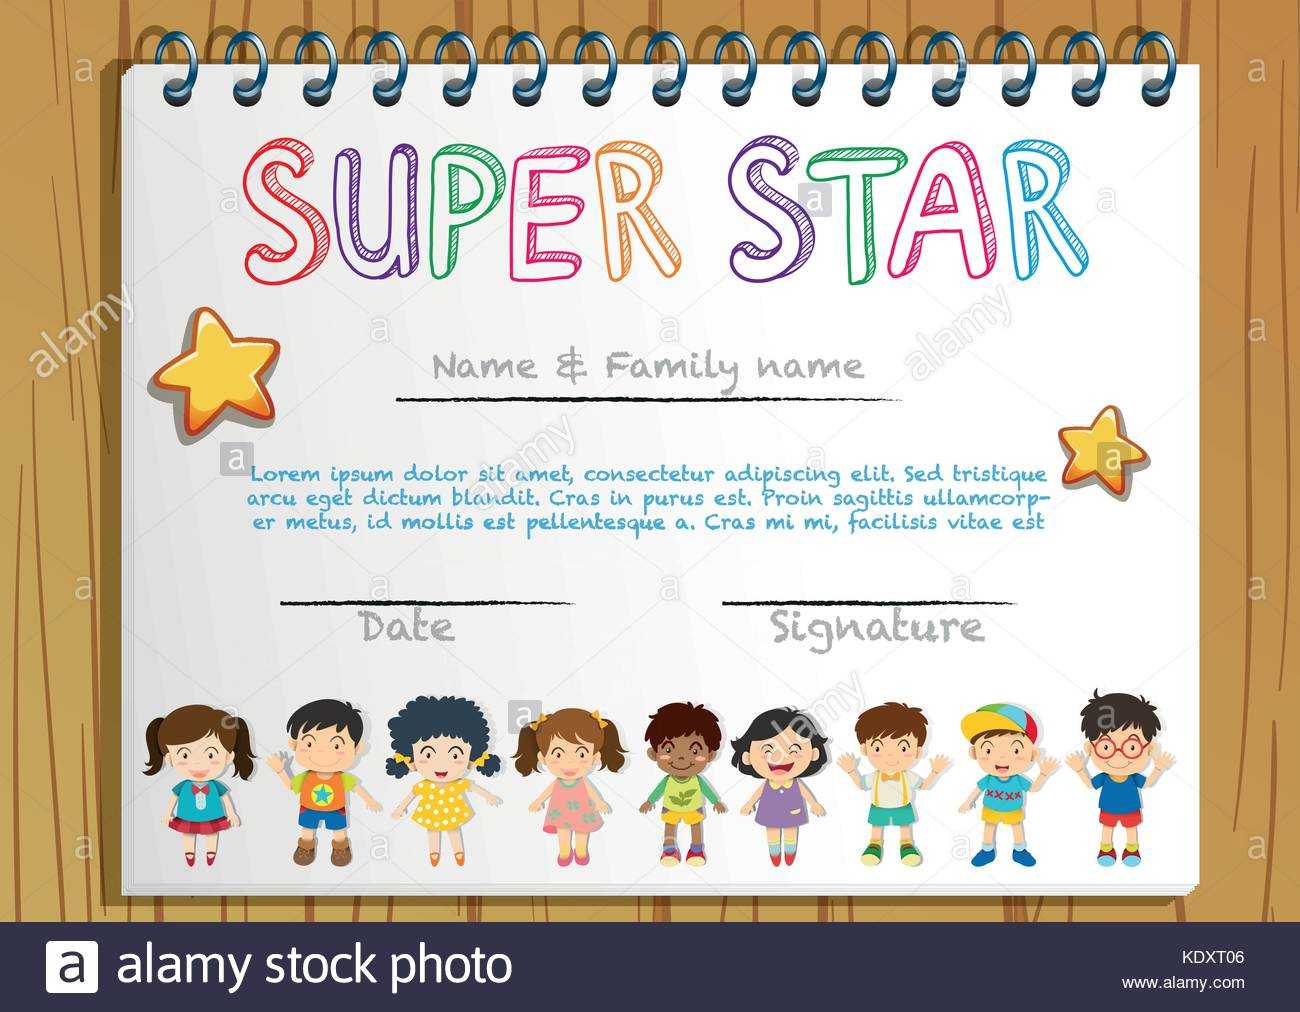 Certificate Template For Super Star Illustration Stock In Star Naming Certificate Template